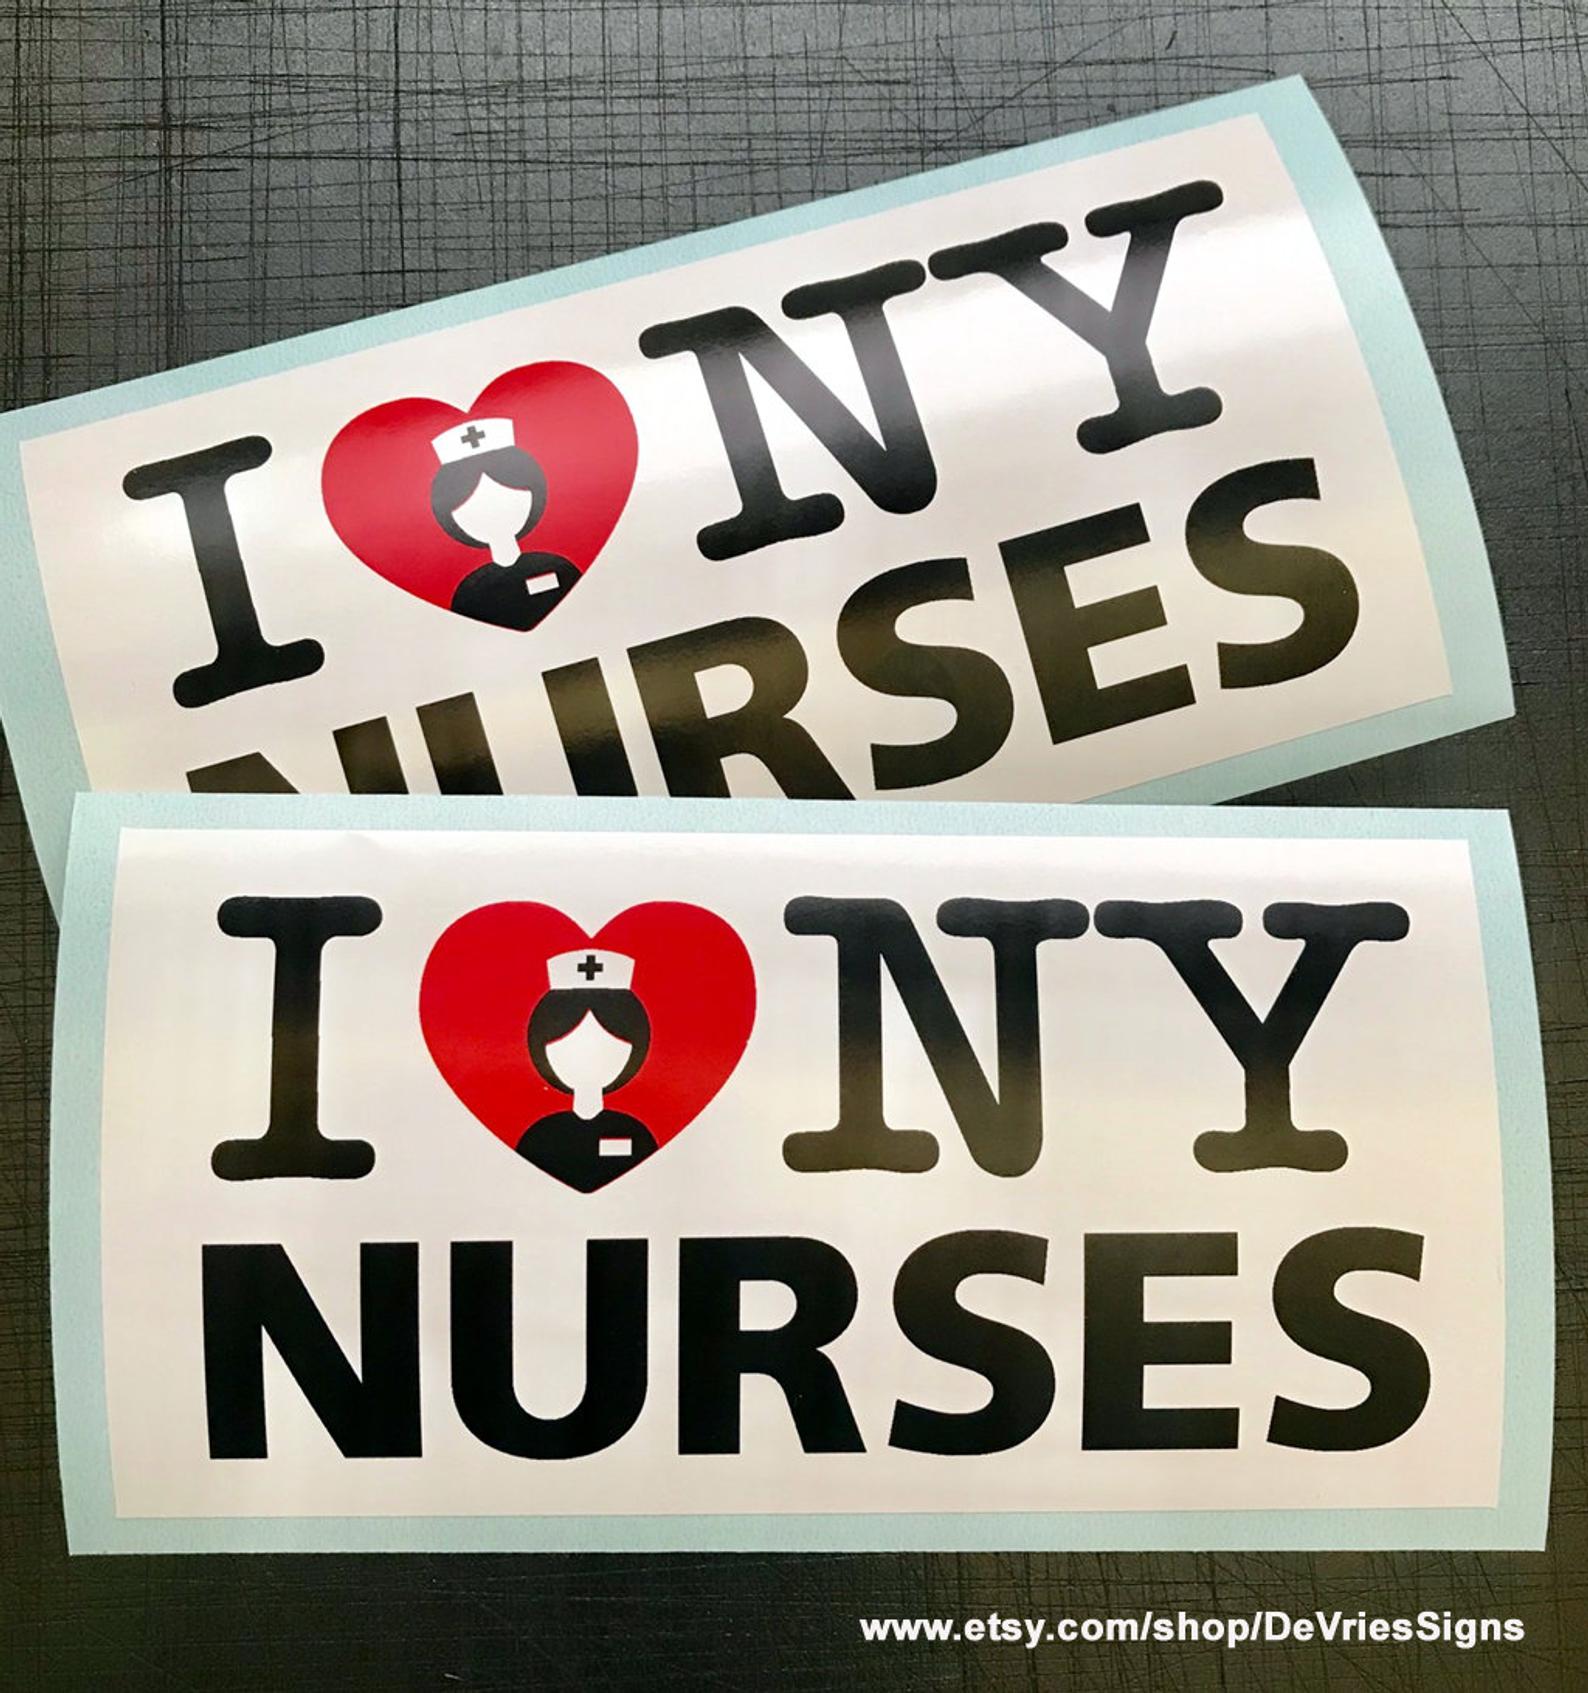 "I Heart NY Nurses" Sticker by DeVries Signs - www.etsy.com/shop/DeVriesSigns.